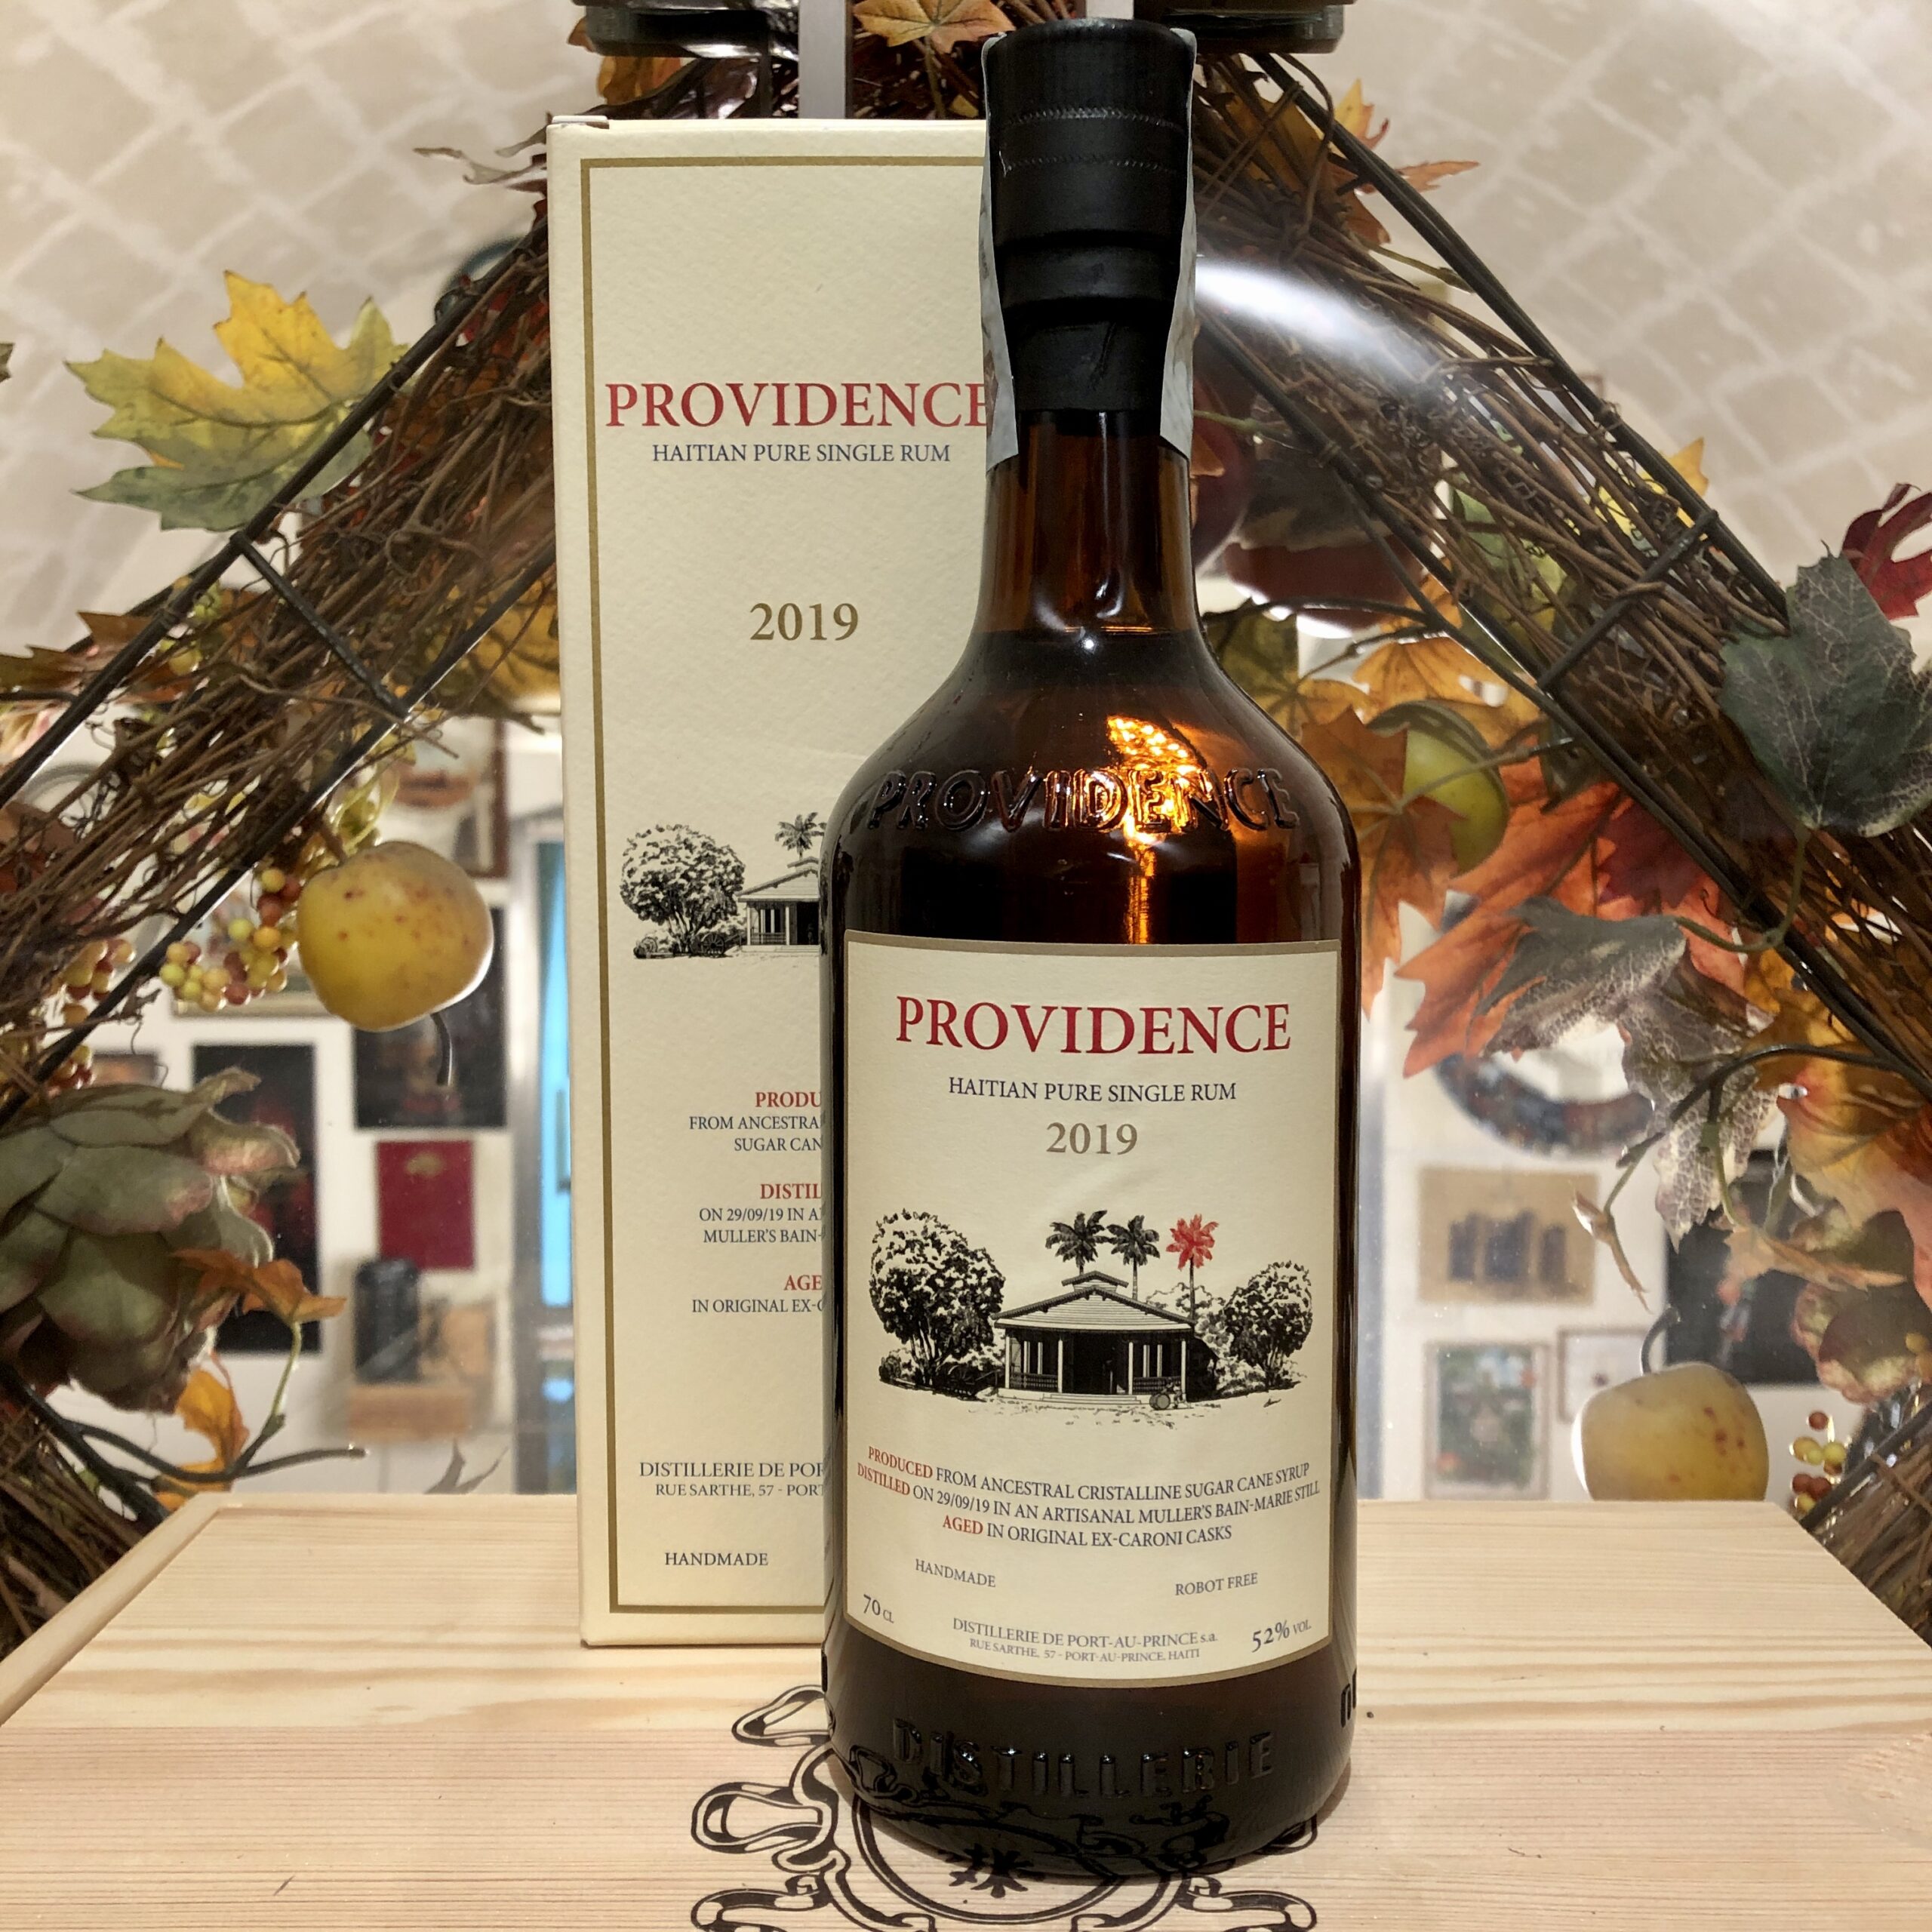 Providence Haitian Pure Single Rum 2019 3 YO